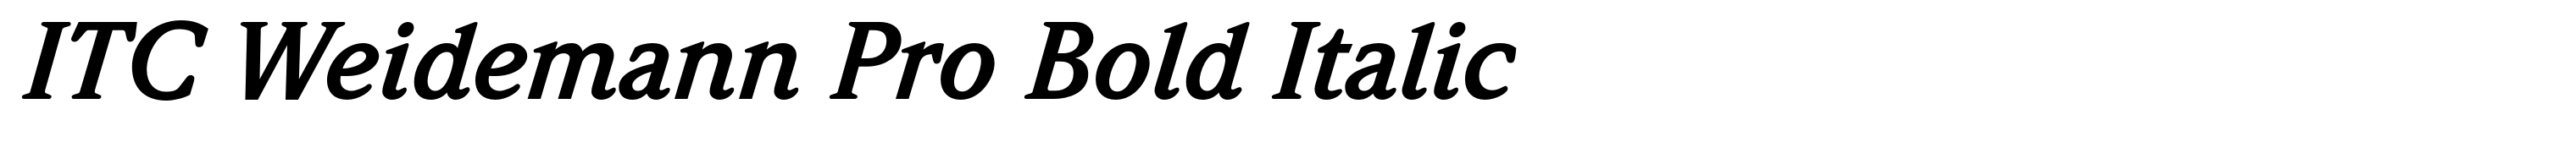 ITC Weidemann Pro Bold Italic